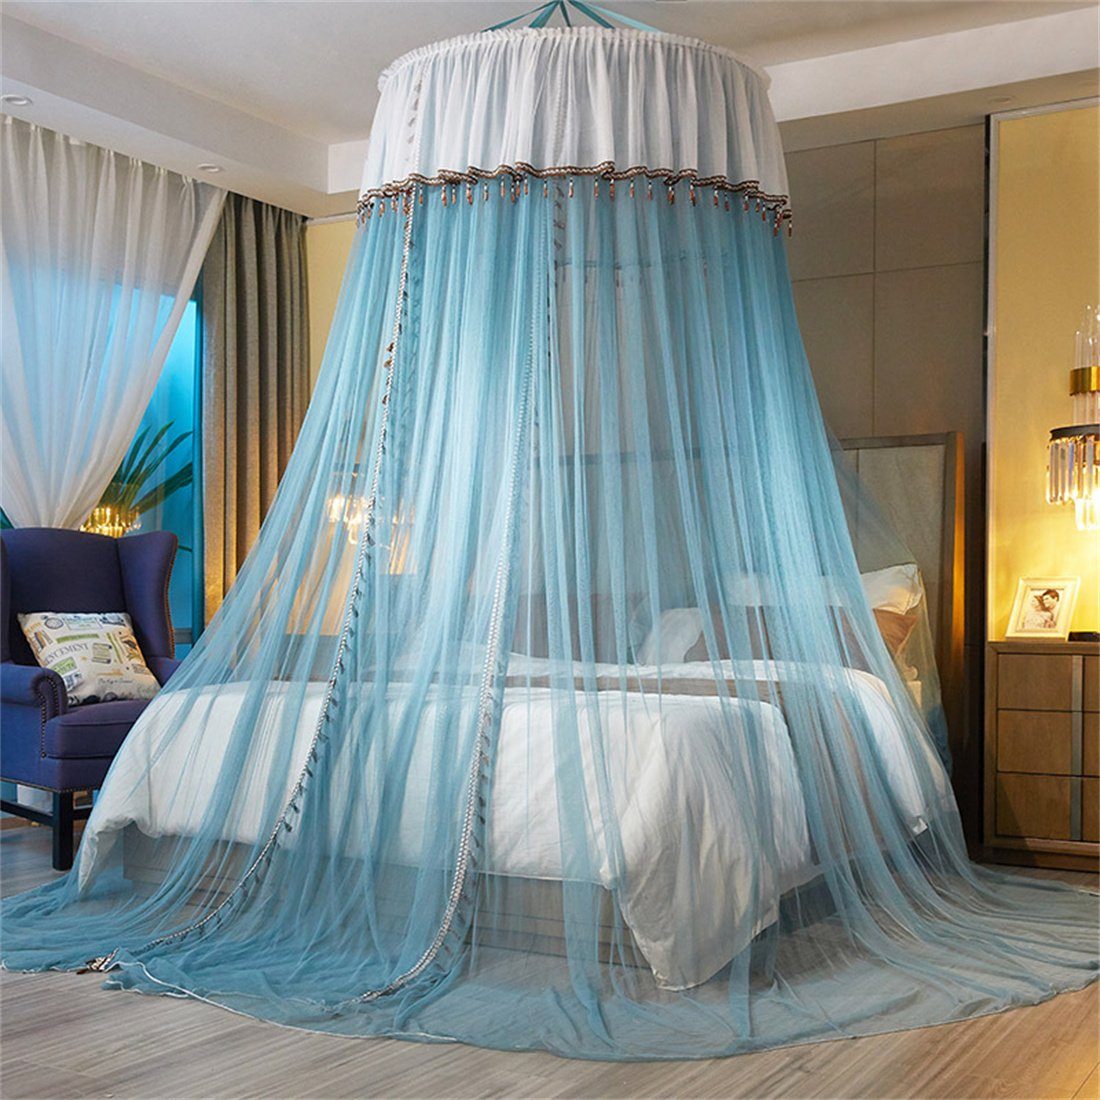 ZAXSD Betthimmel Prinzessin Moskitonetz,Anti-Moskito blau Bett Vorhang Kuppel Bettdecke Stil